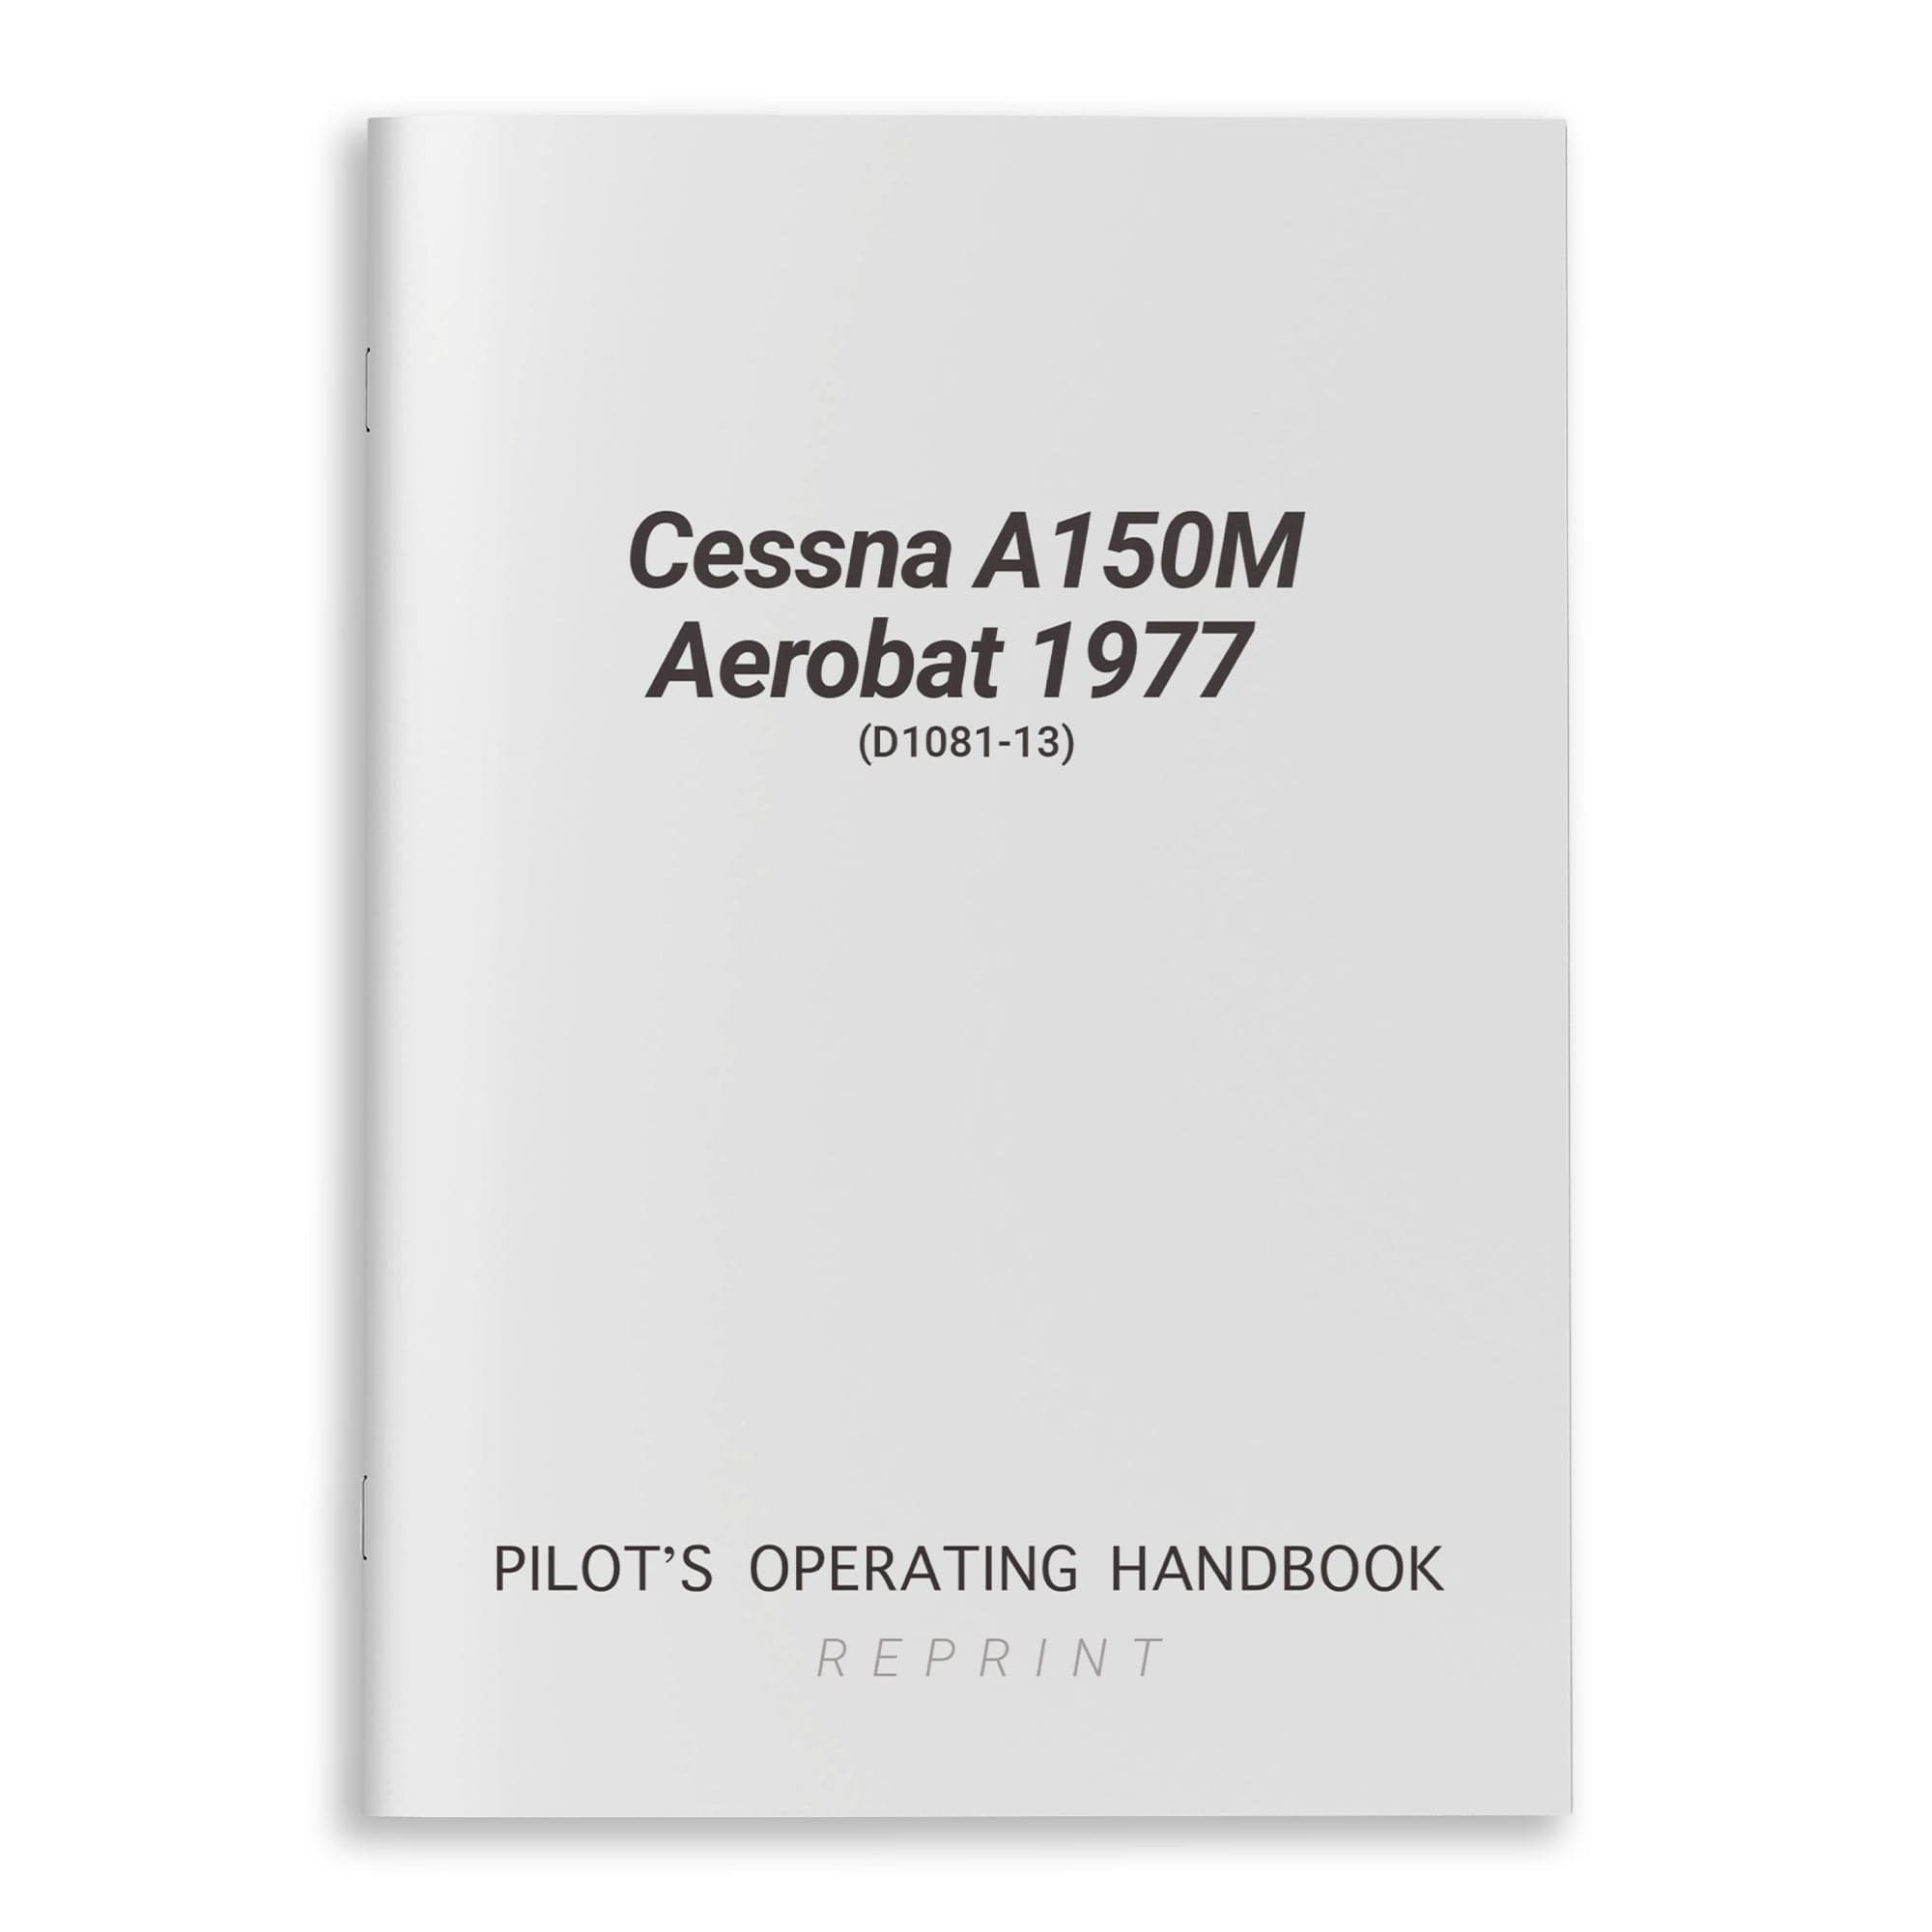 Cessna A150M Aerobat 1977 Pilot Operating Handbook (D1081-13)